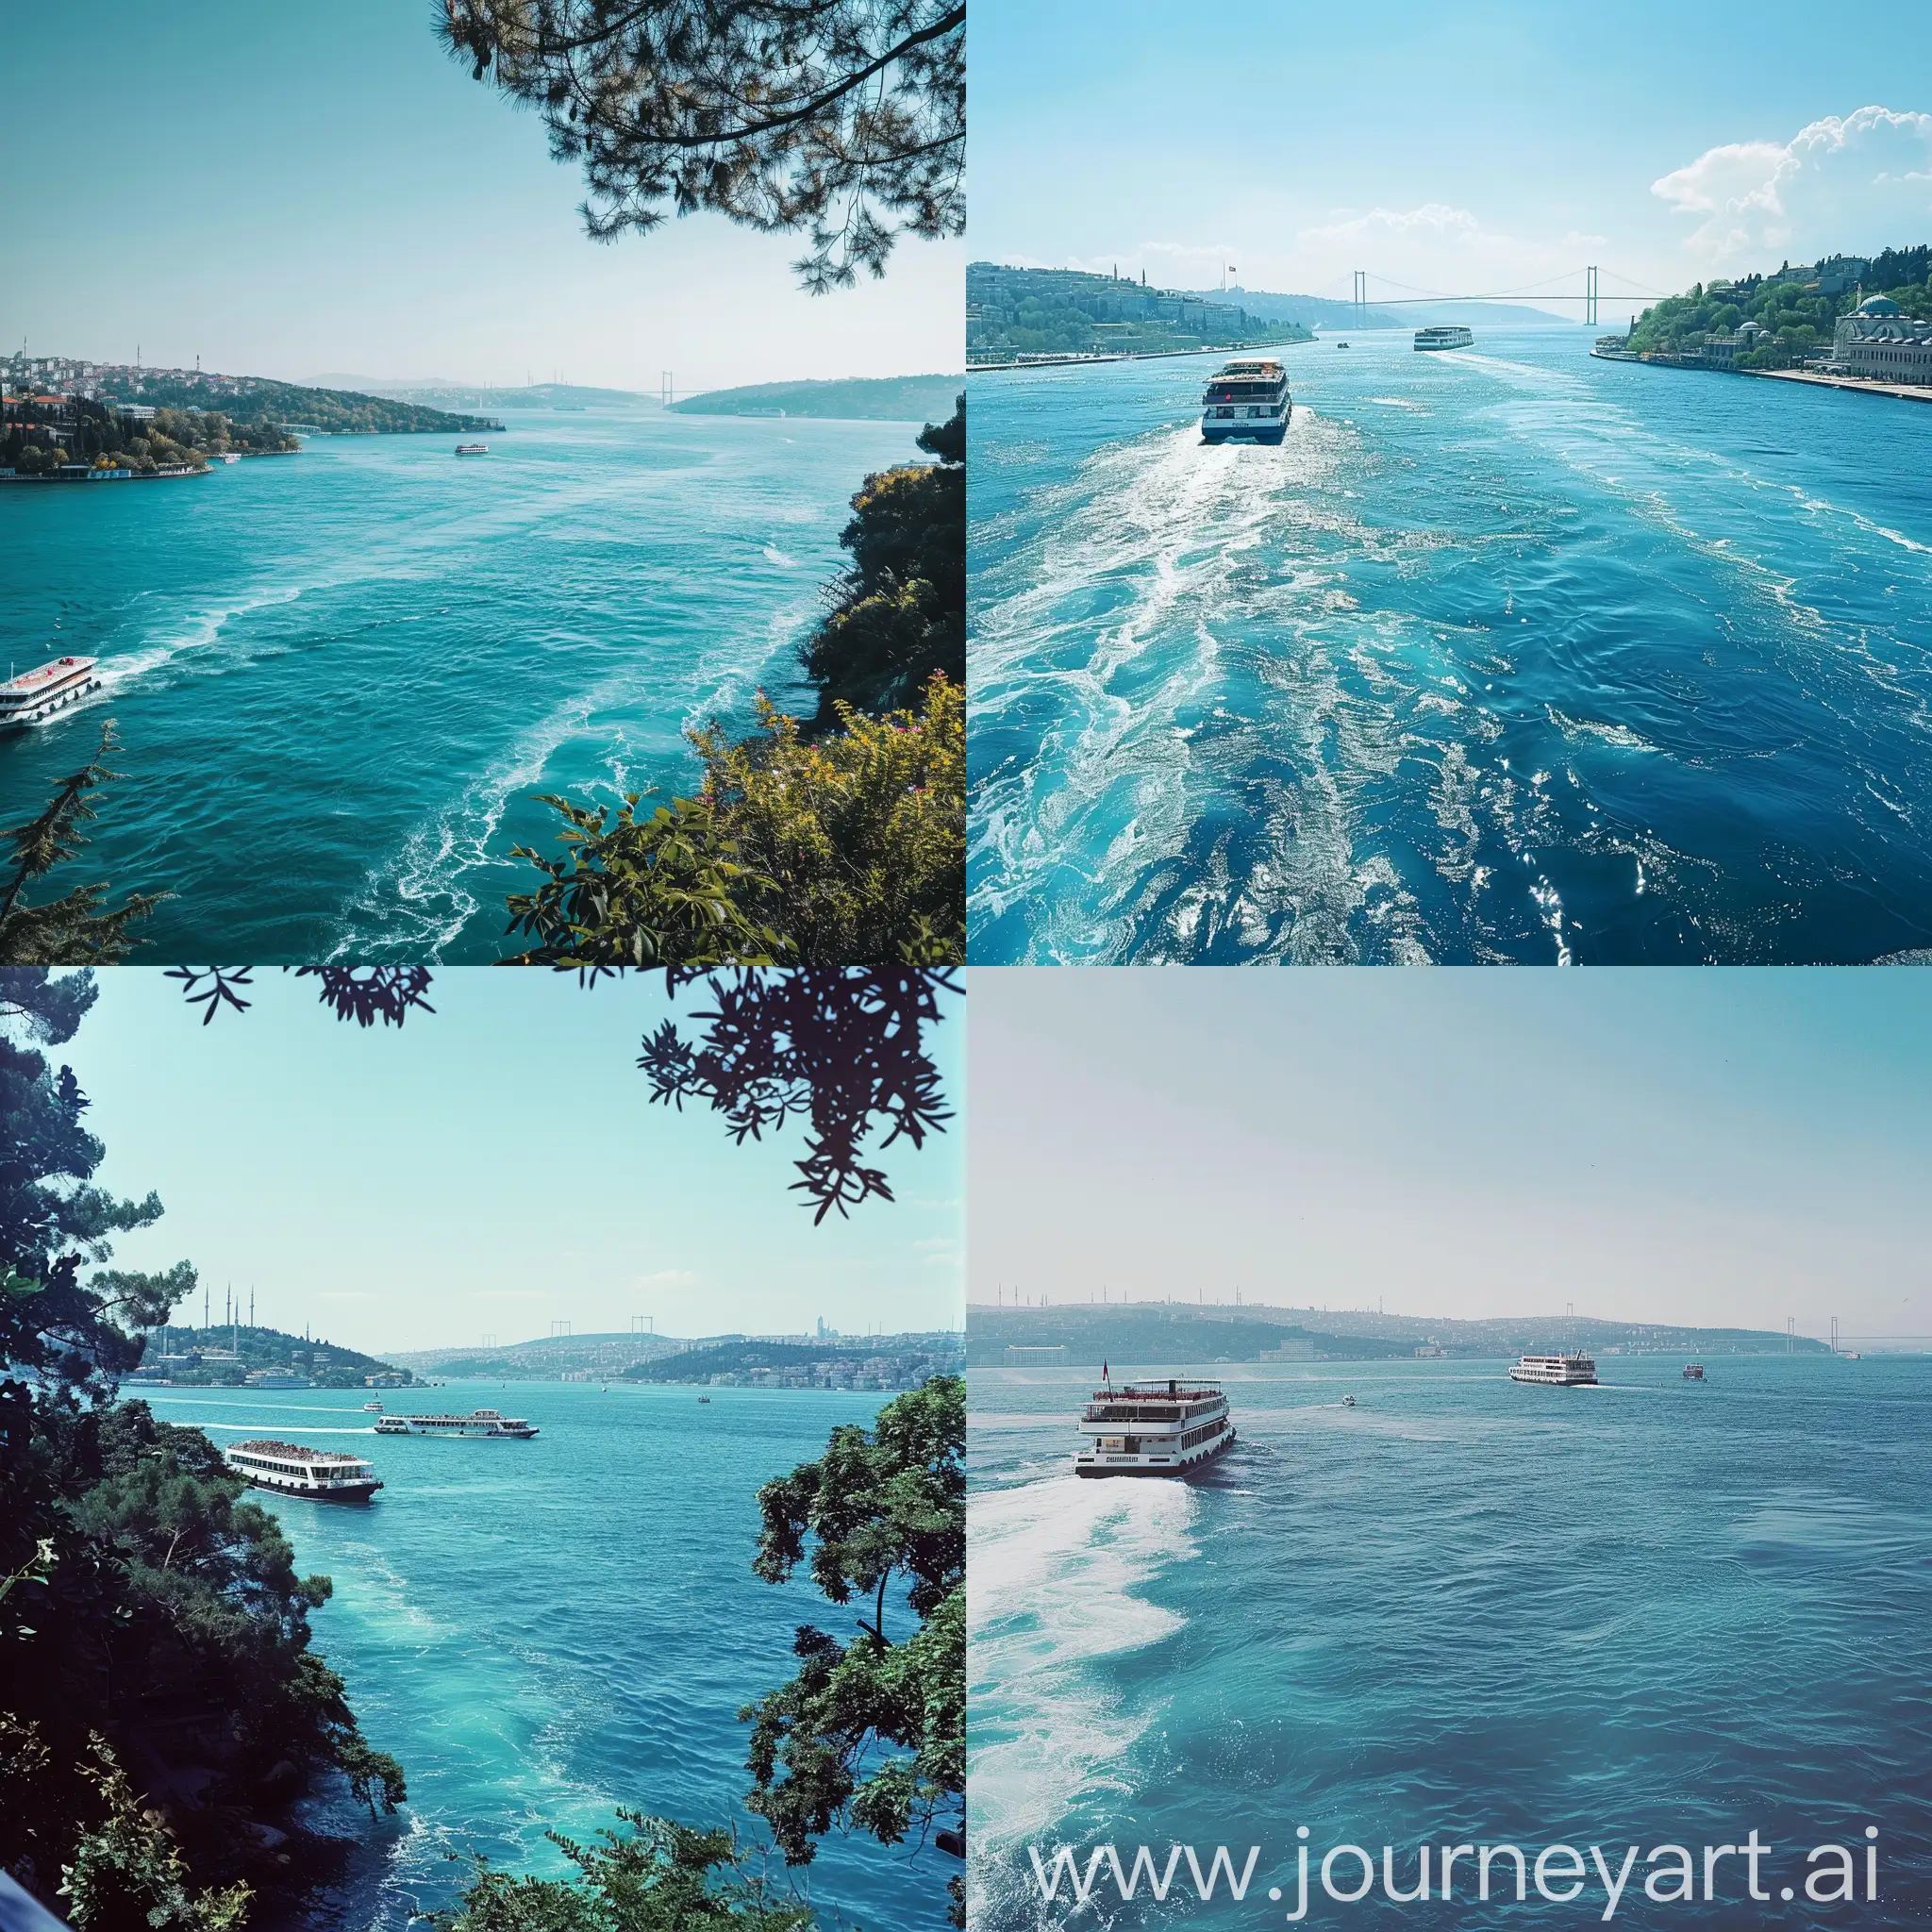 Scenic-Istanbul-Bosphorus-with-Two-Ferries-on-Blue-Sea-Studio-Ghibli-Style